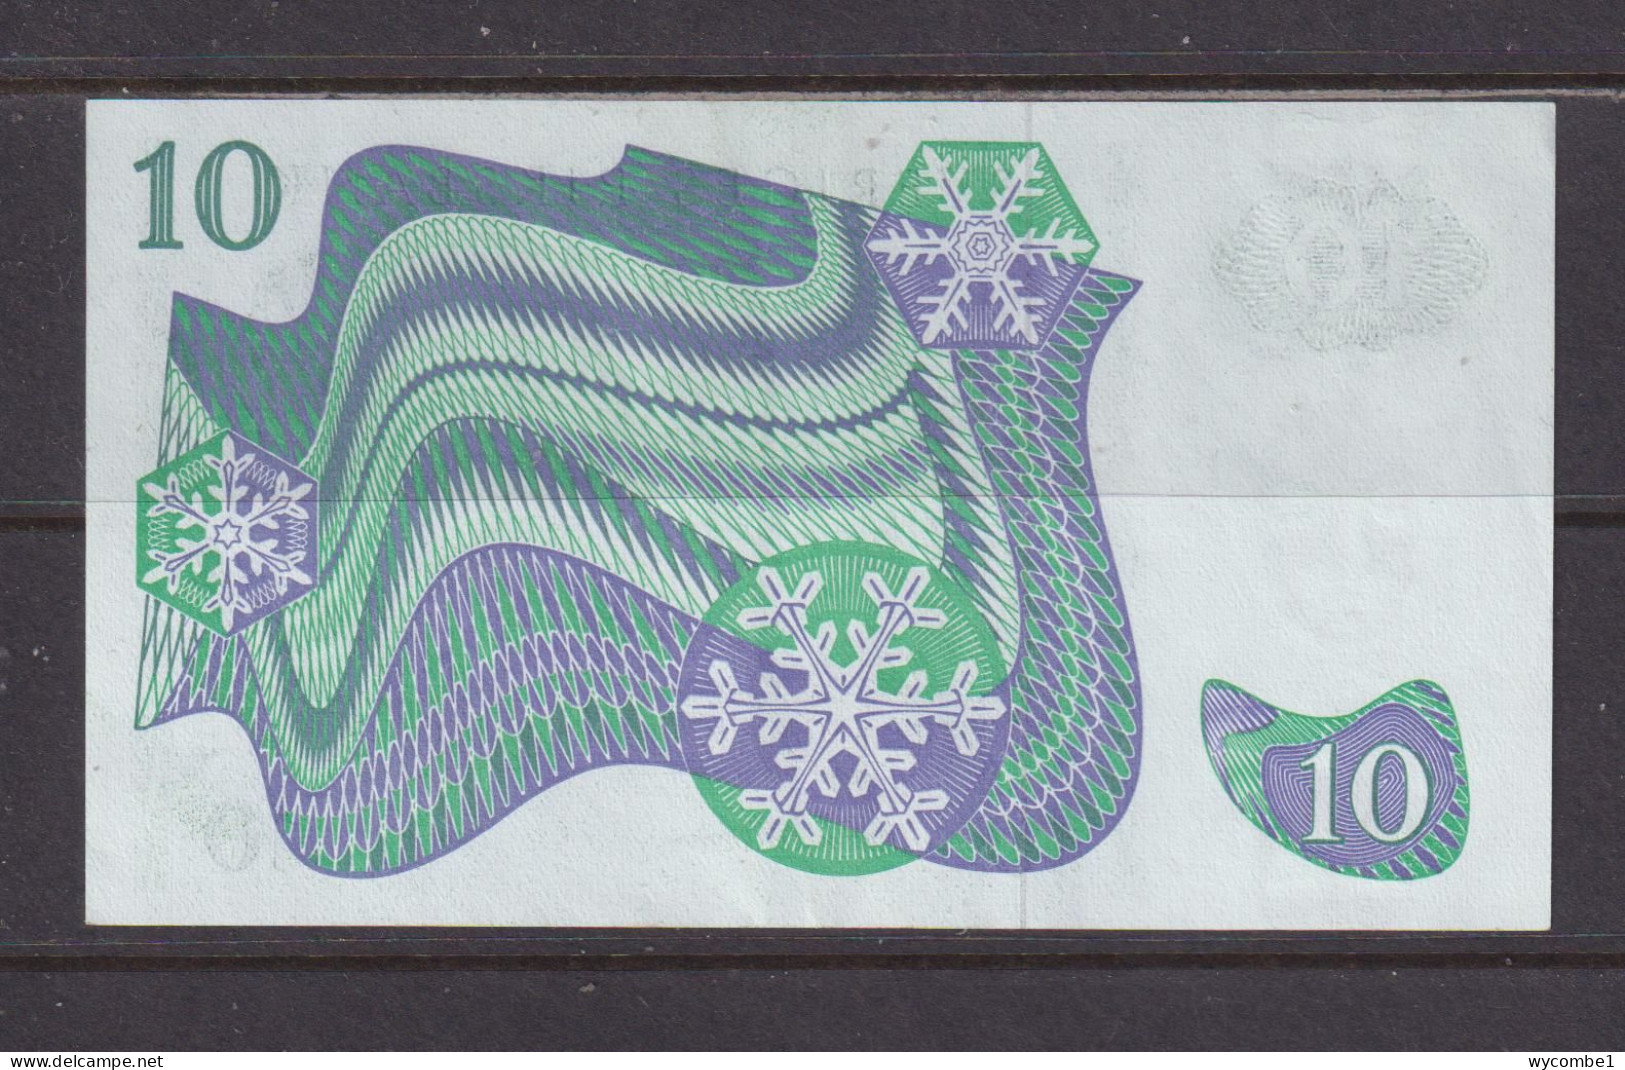 SWEDEN - 1976 10 Kronor AUNC/XF Banknote As Scans - Suède